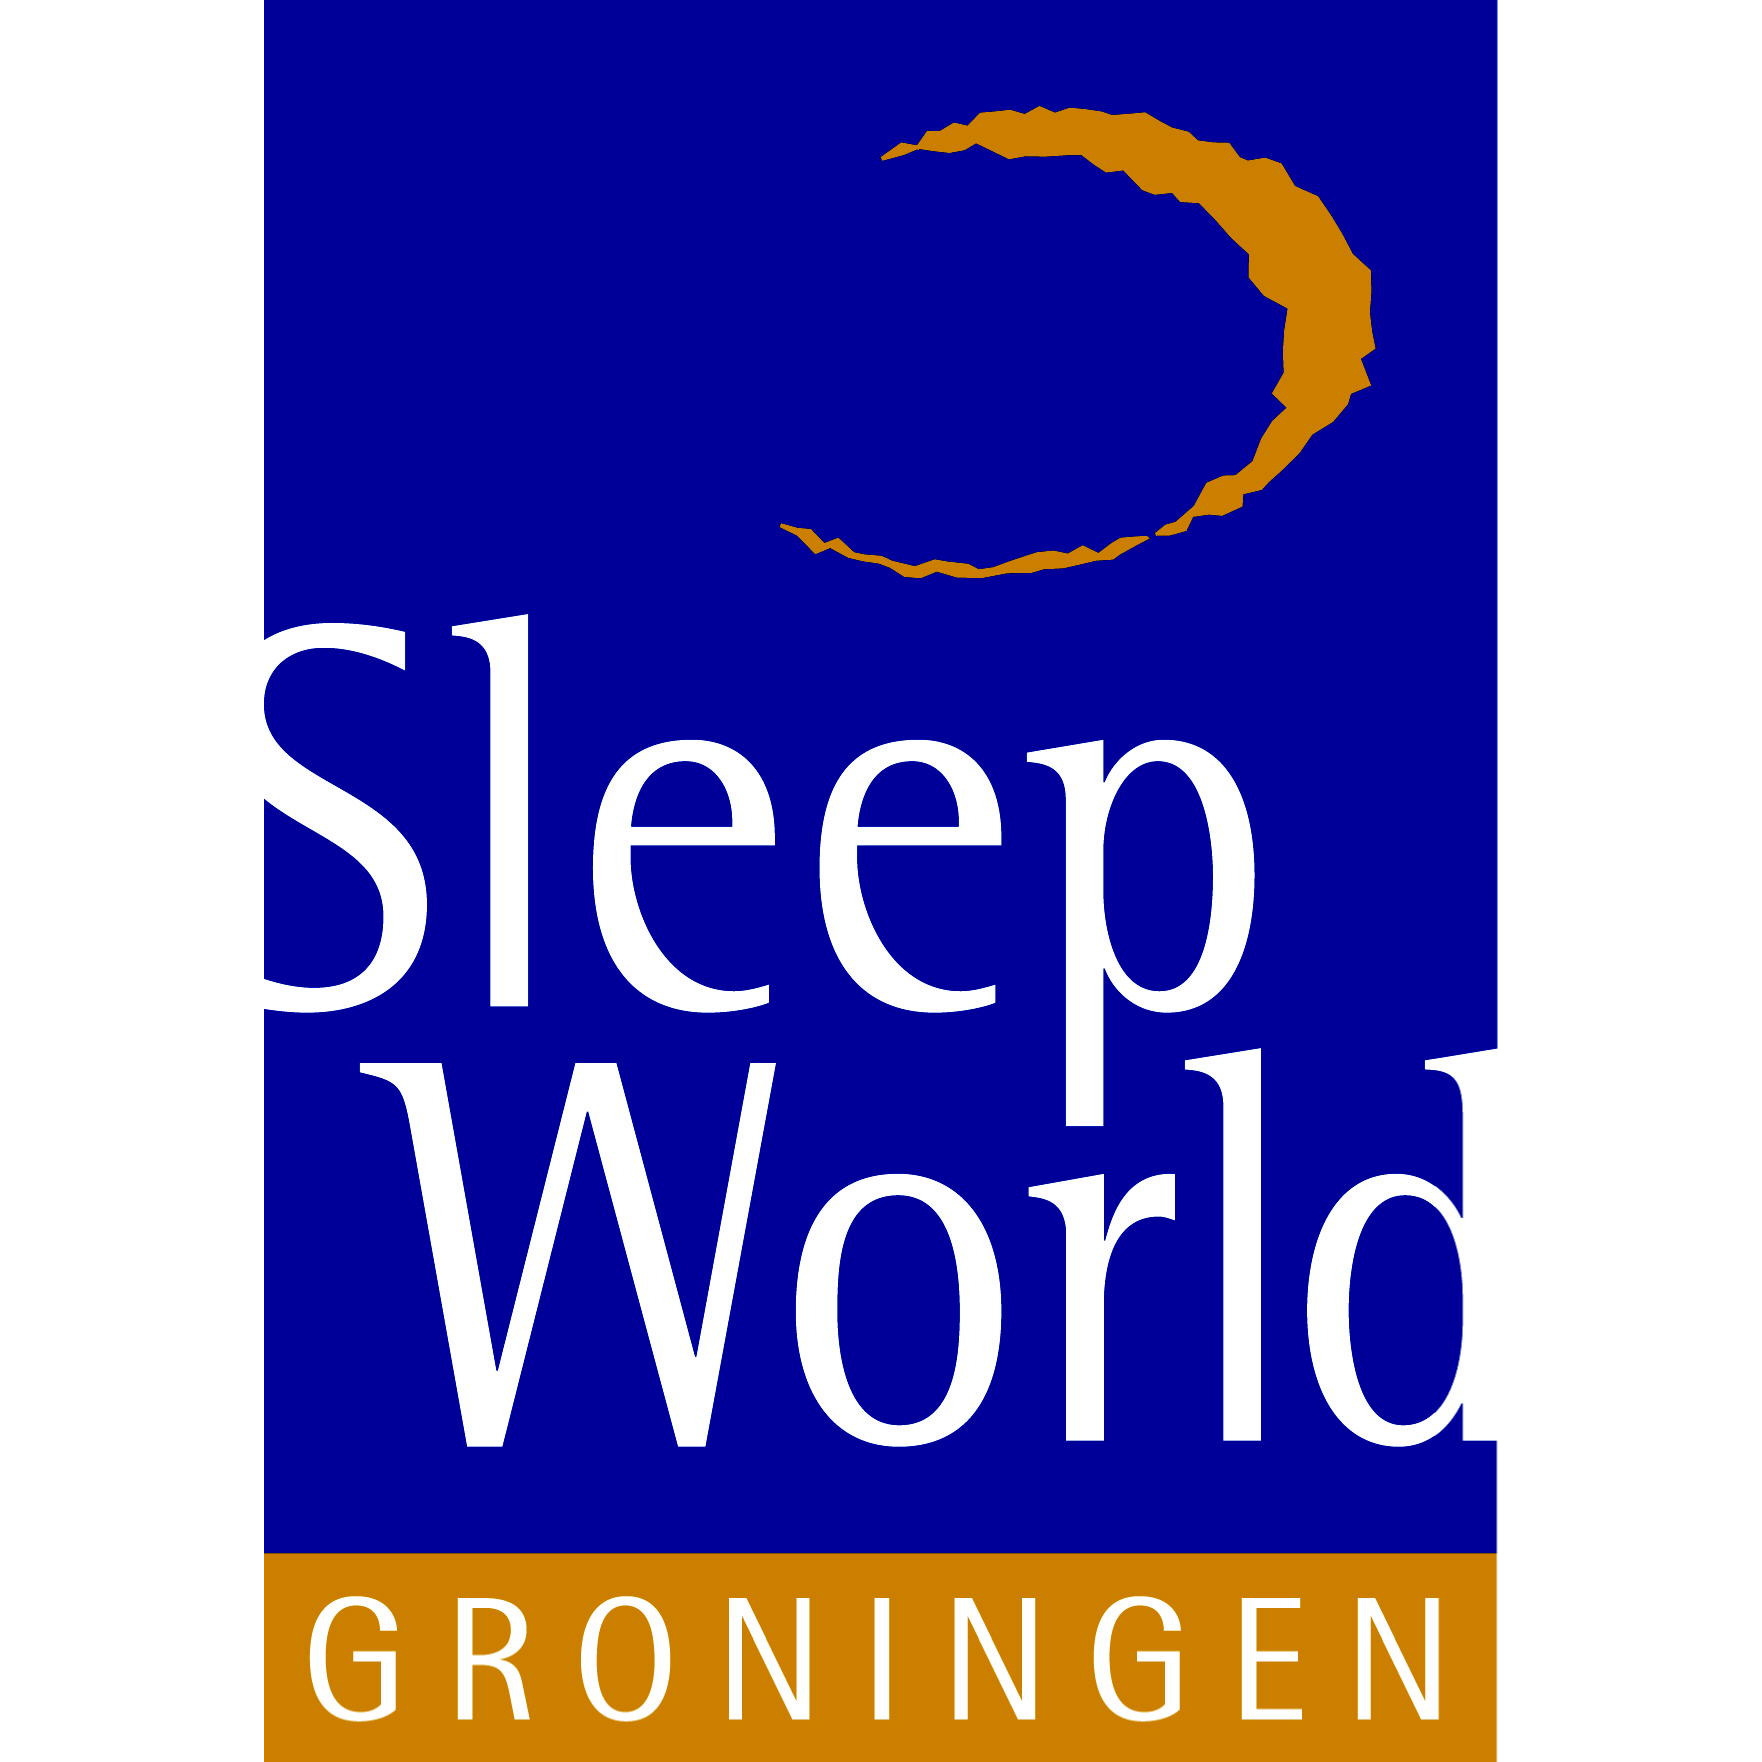 SleepWorld Groningen Slaapkamer Speciaalzaak - Mattress Store - Groningen - 050 527 1555 Netherlands | ShowMeLocal.com